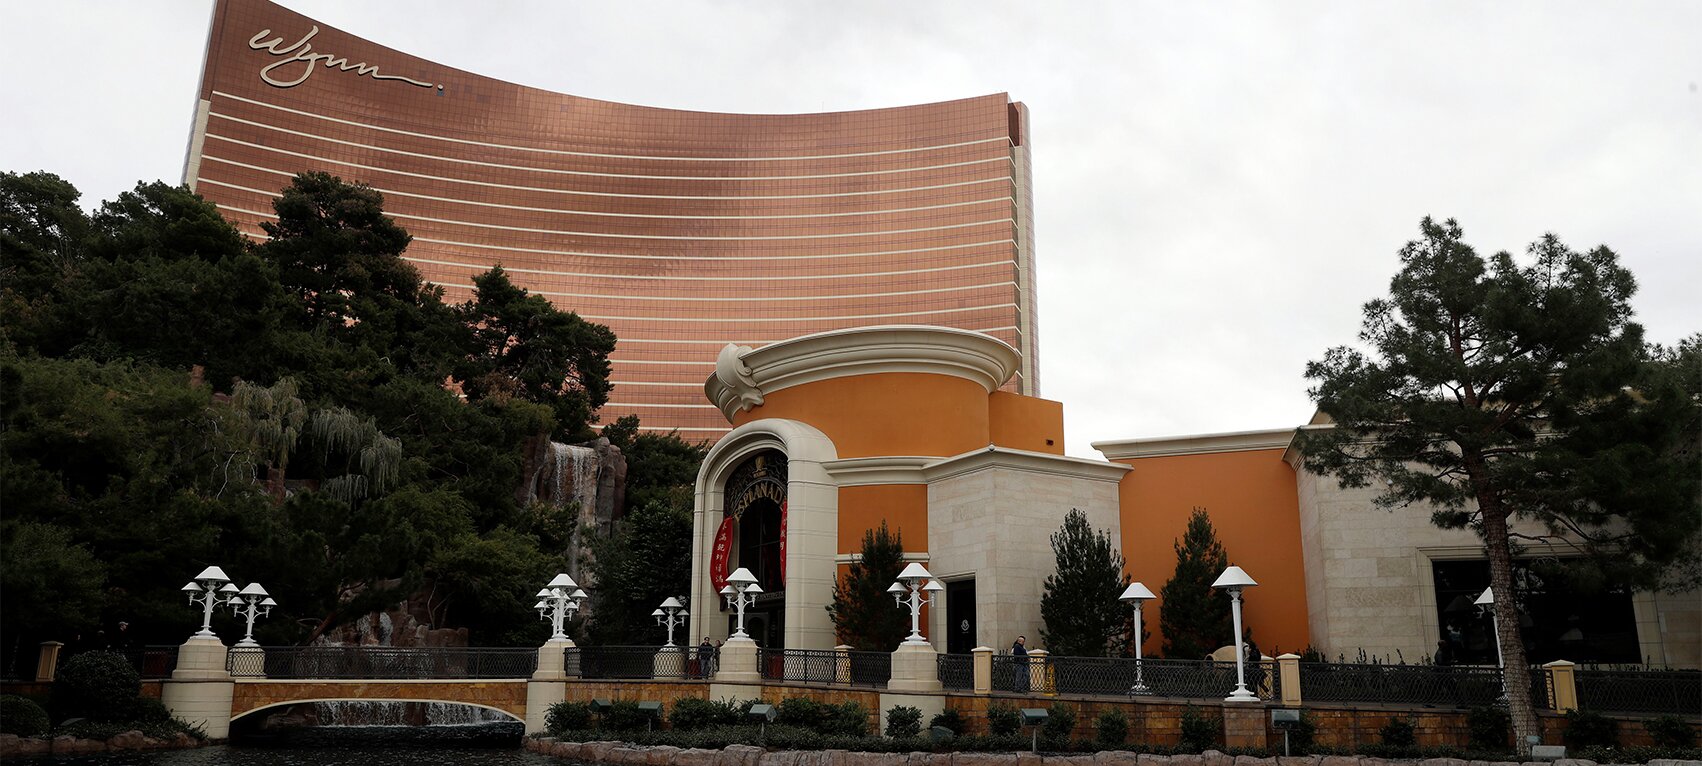 Las Vegas Casinos Losing Money 2015